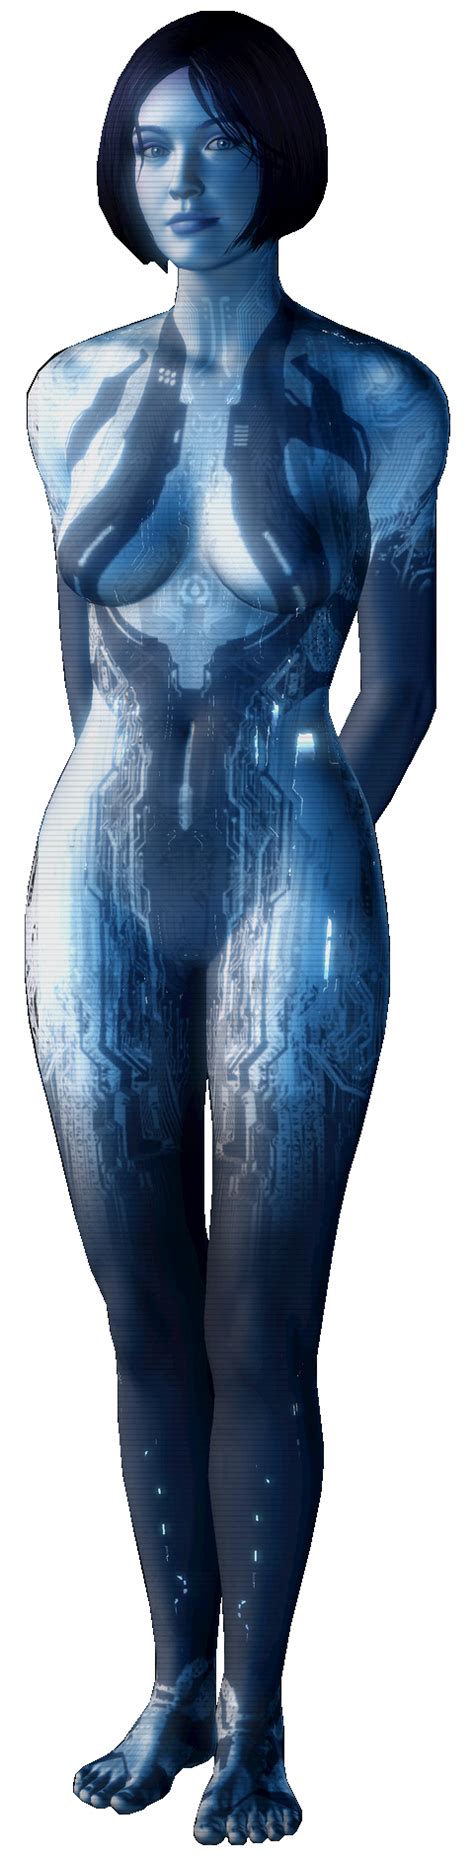 Halo 4 Cortana Character Model